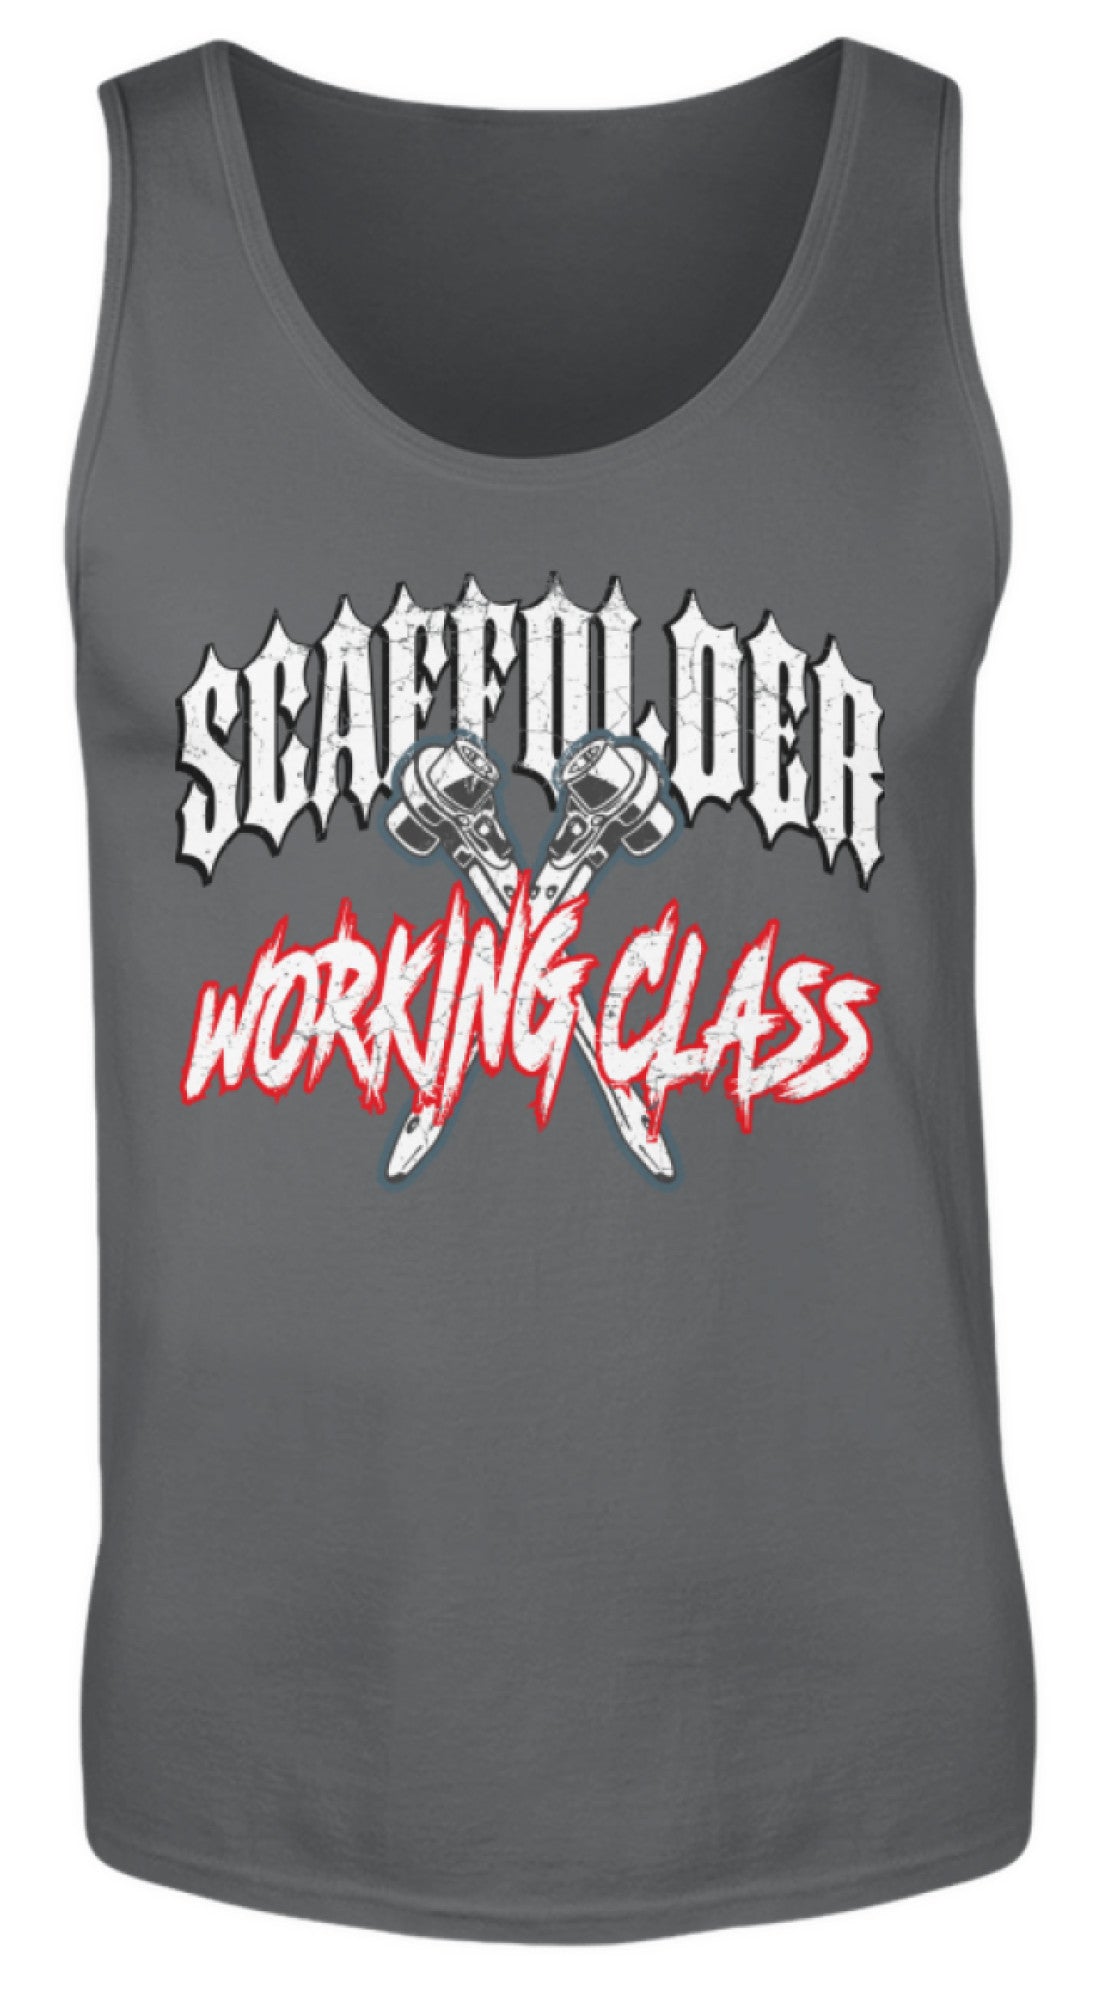 Scaffolder Working Class €19.95 Gerüstbauer - Shop >>